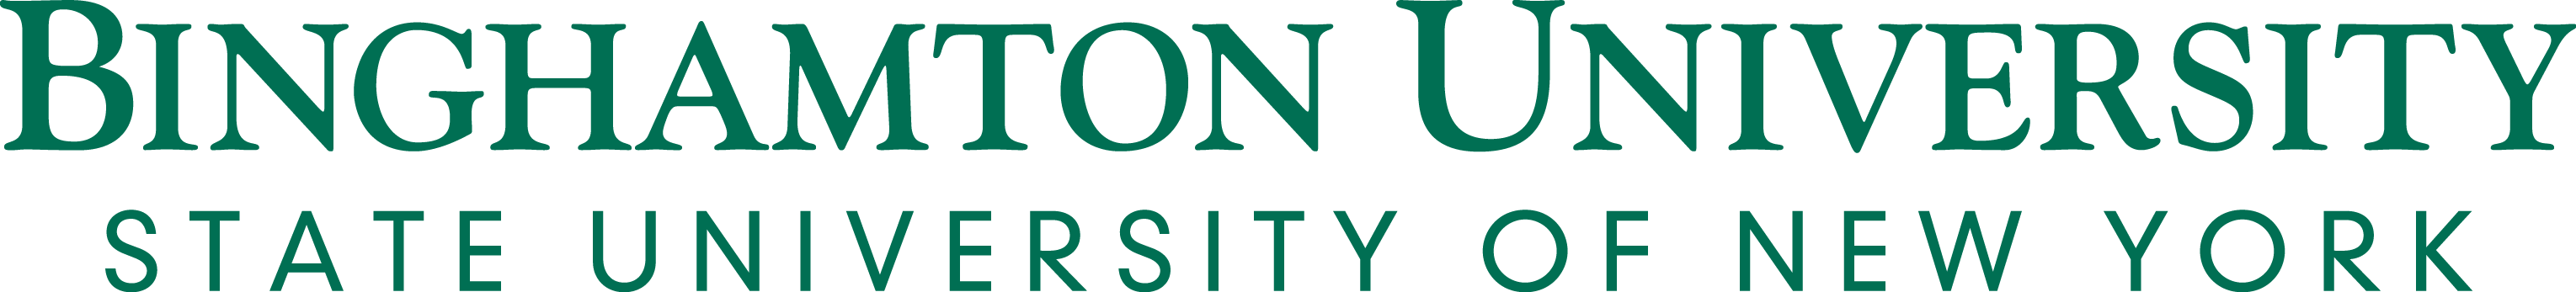 Binghamton University Logo photo - 1